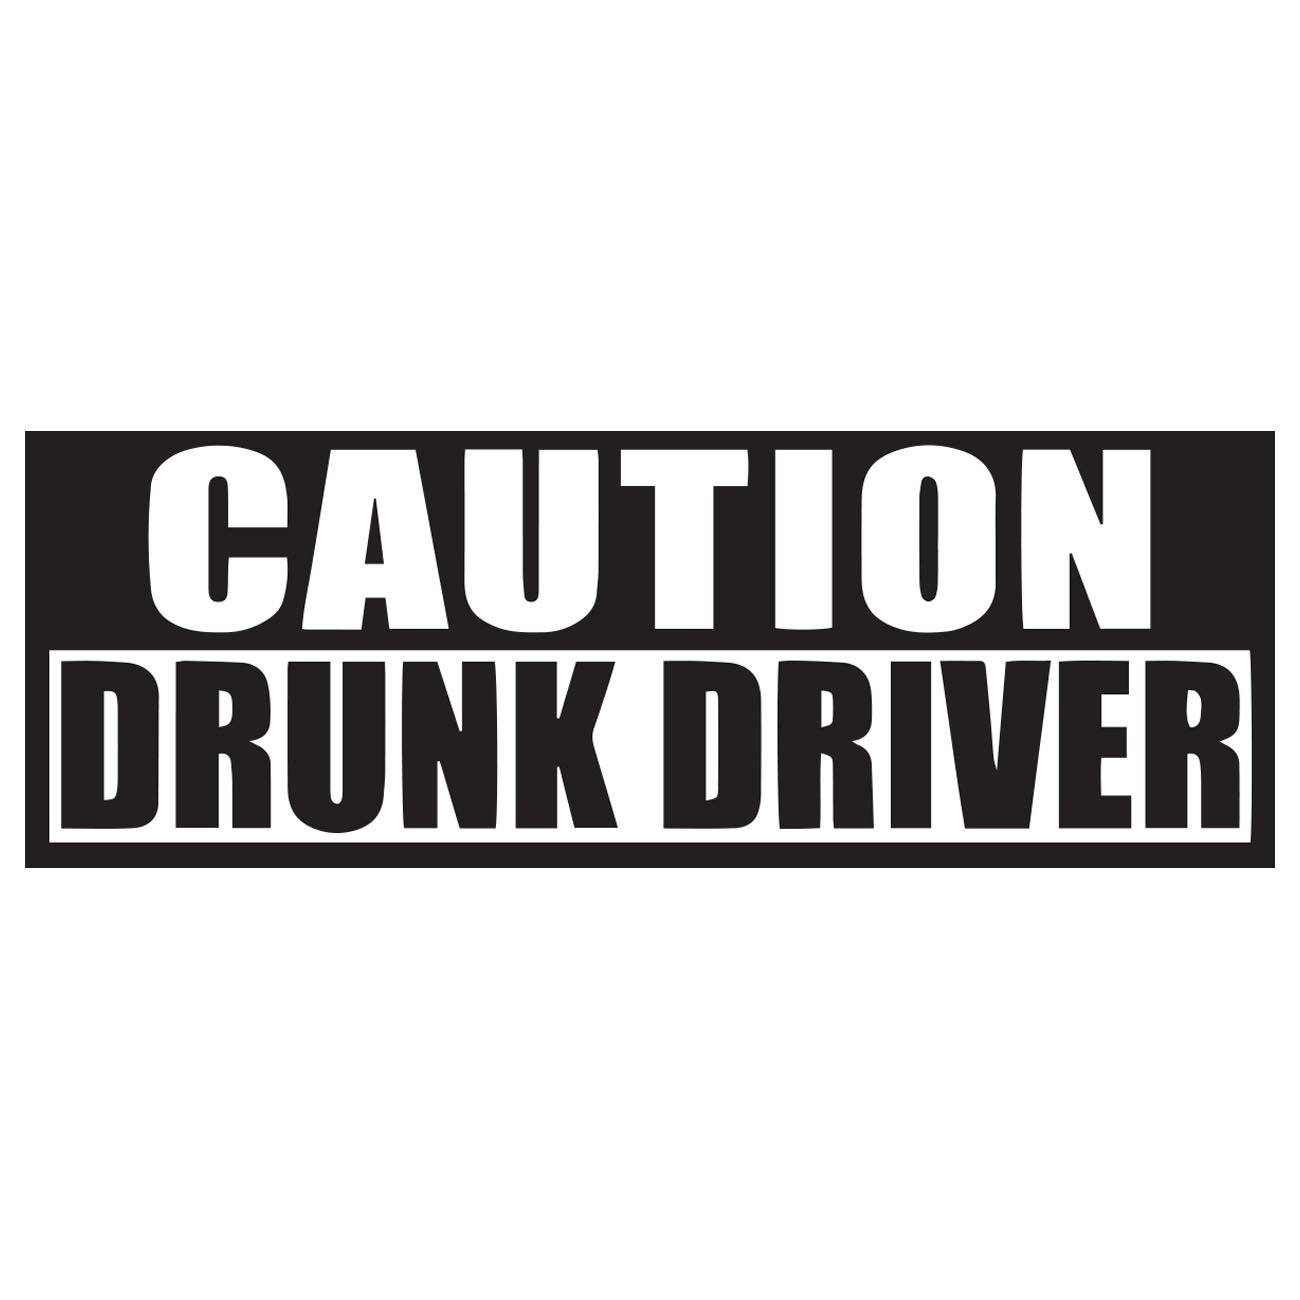 Caution drunk driver